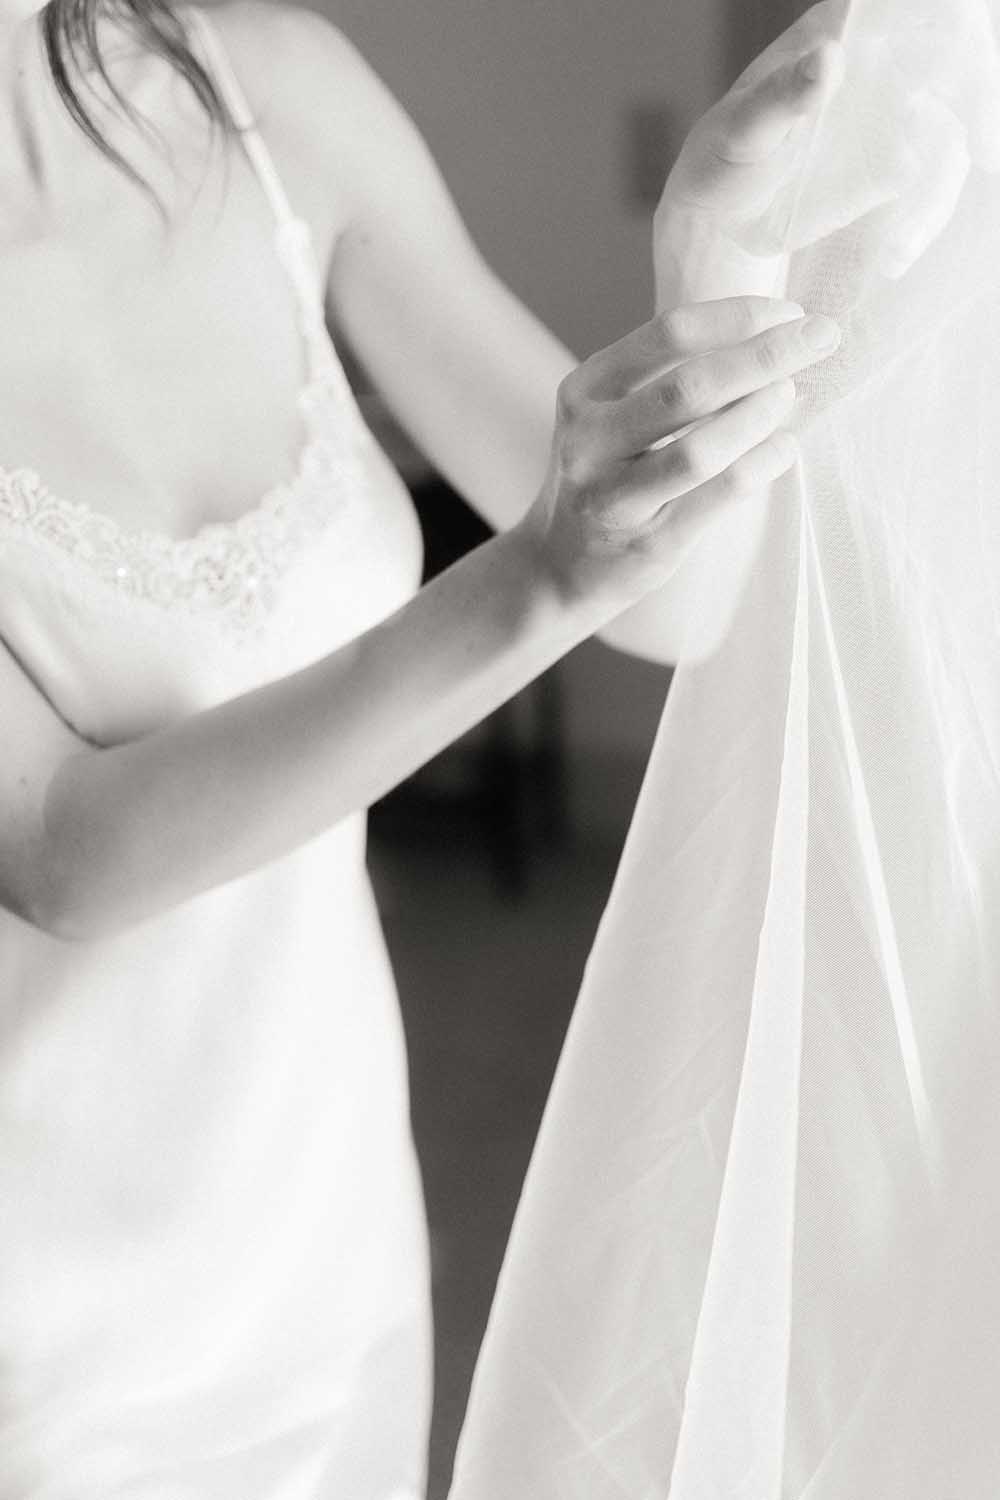 la mariée touche sa robe de mariage